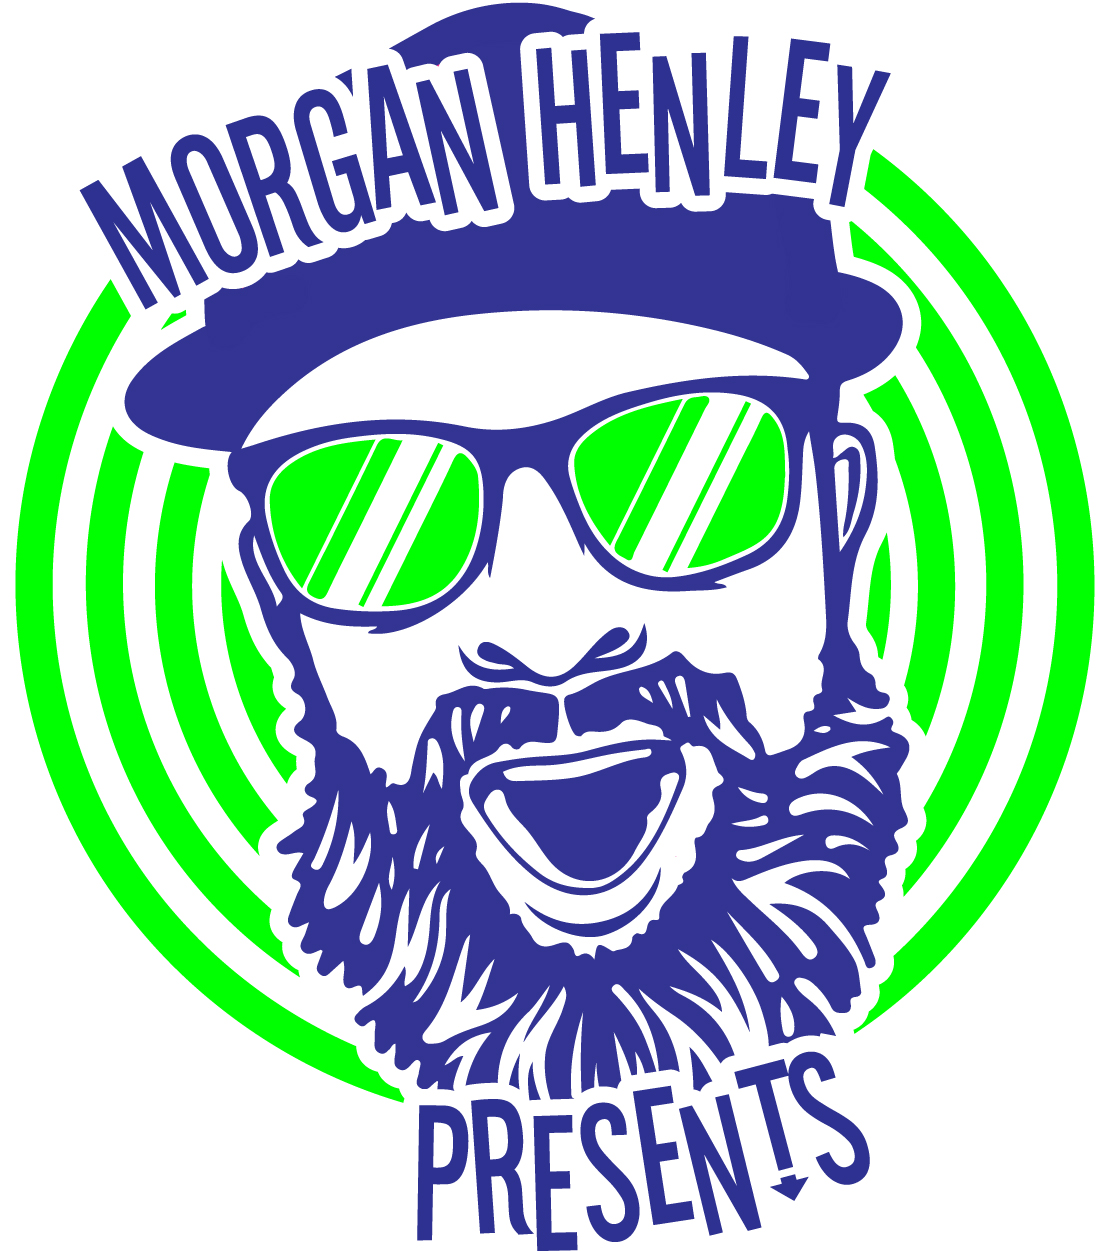 Morgan Henley Presents logo